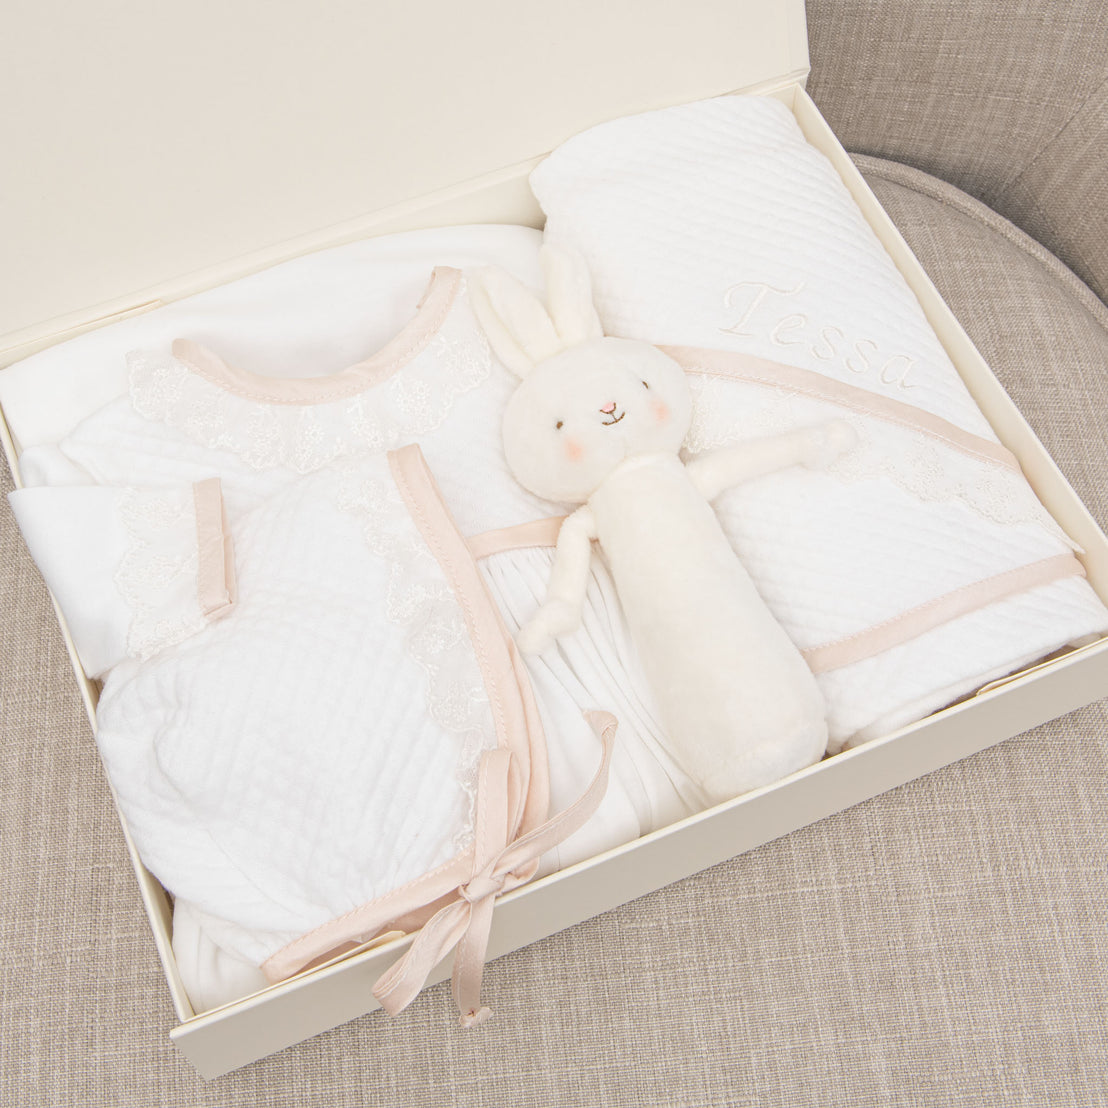 Tessa Newborn Gift Set - Save 10%